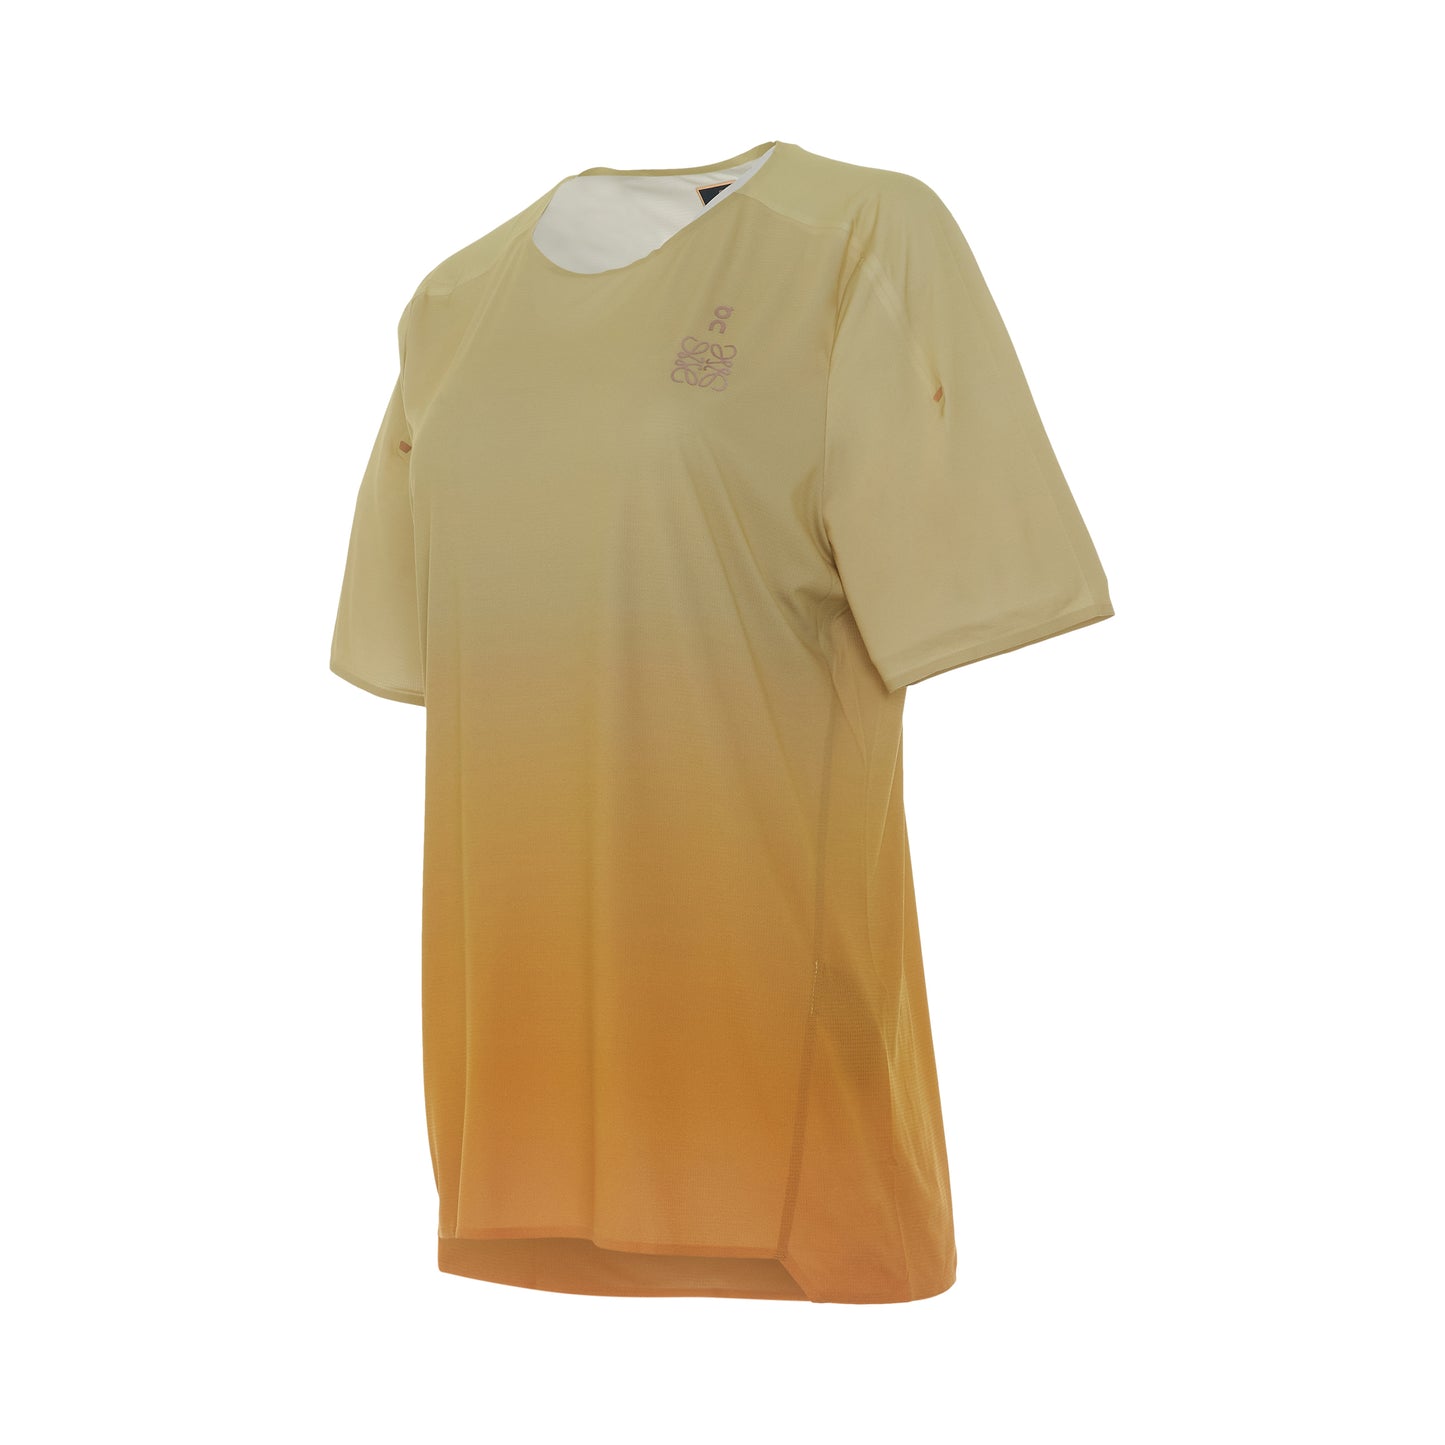 Loewe x ON Performance T-Shirt in Gradient Orange